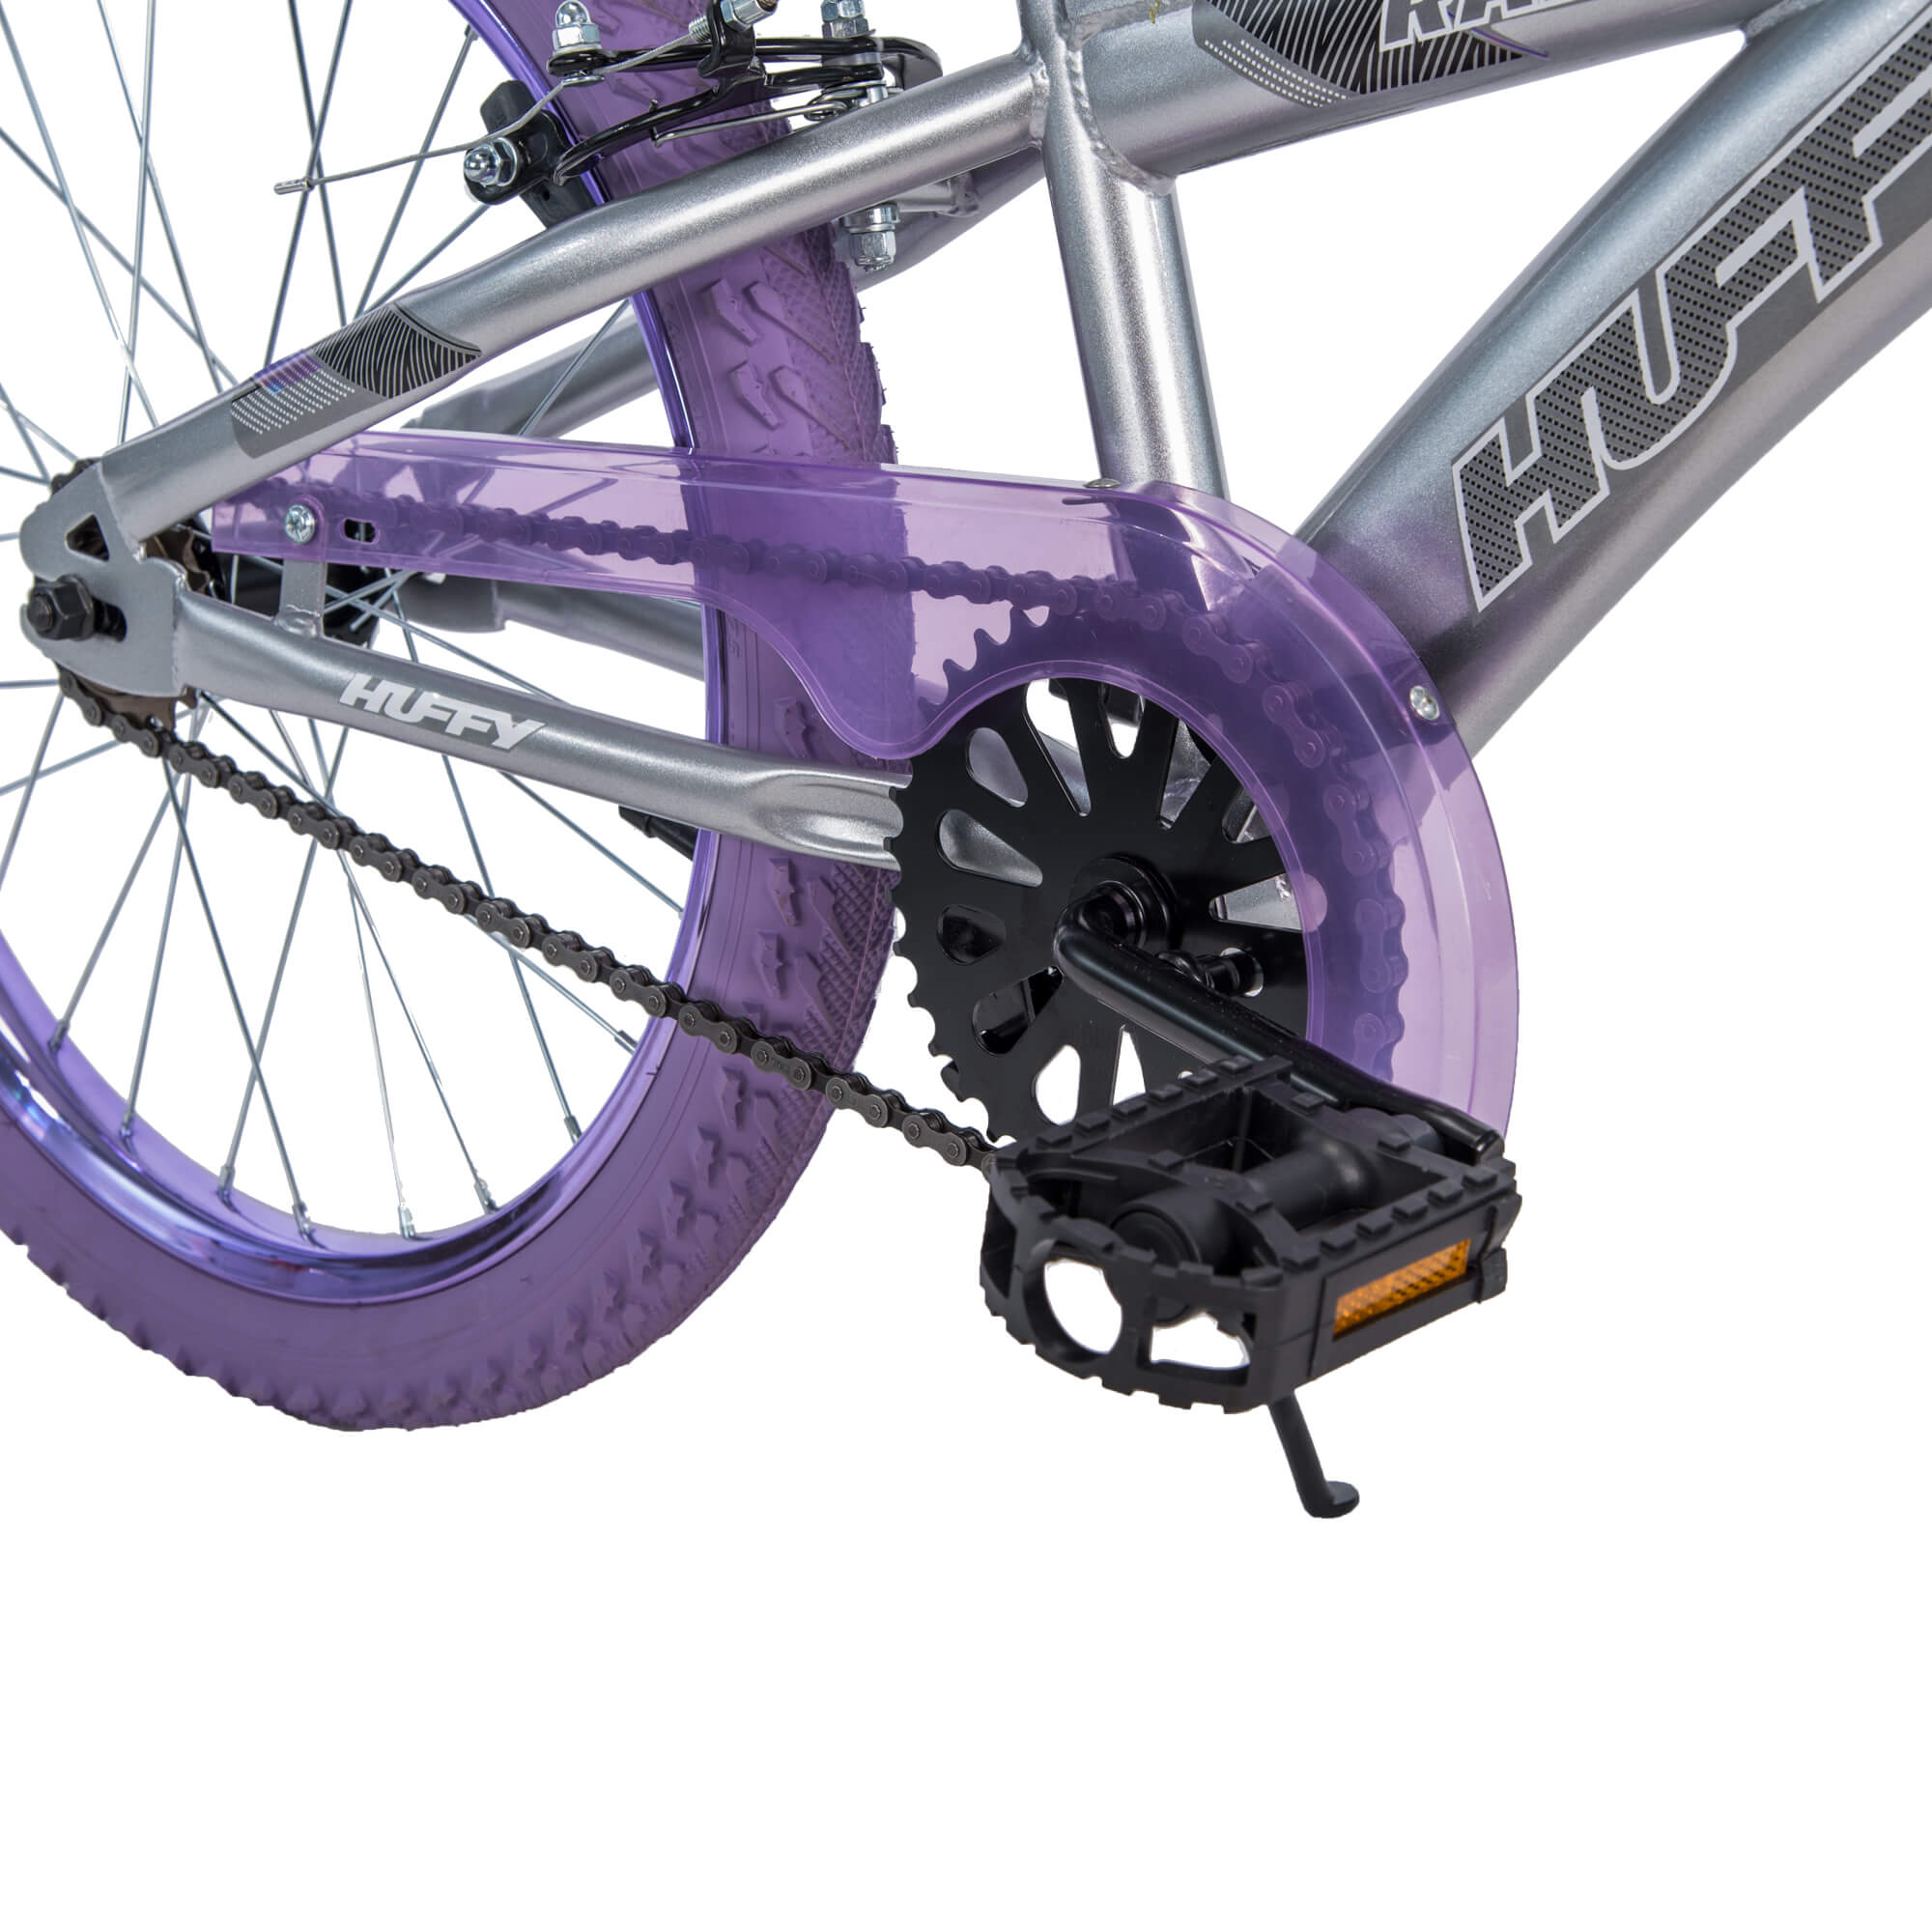 Huffy 20" Radium Girls' Metaloid BMX-Style Bike, Purple - image 5 of 6